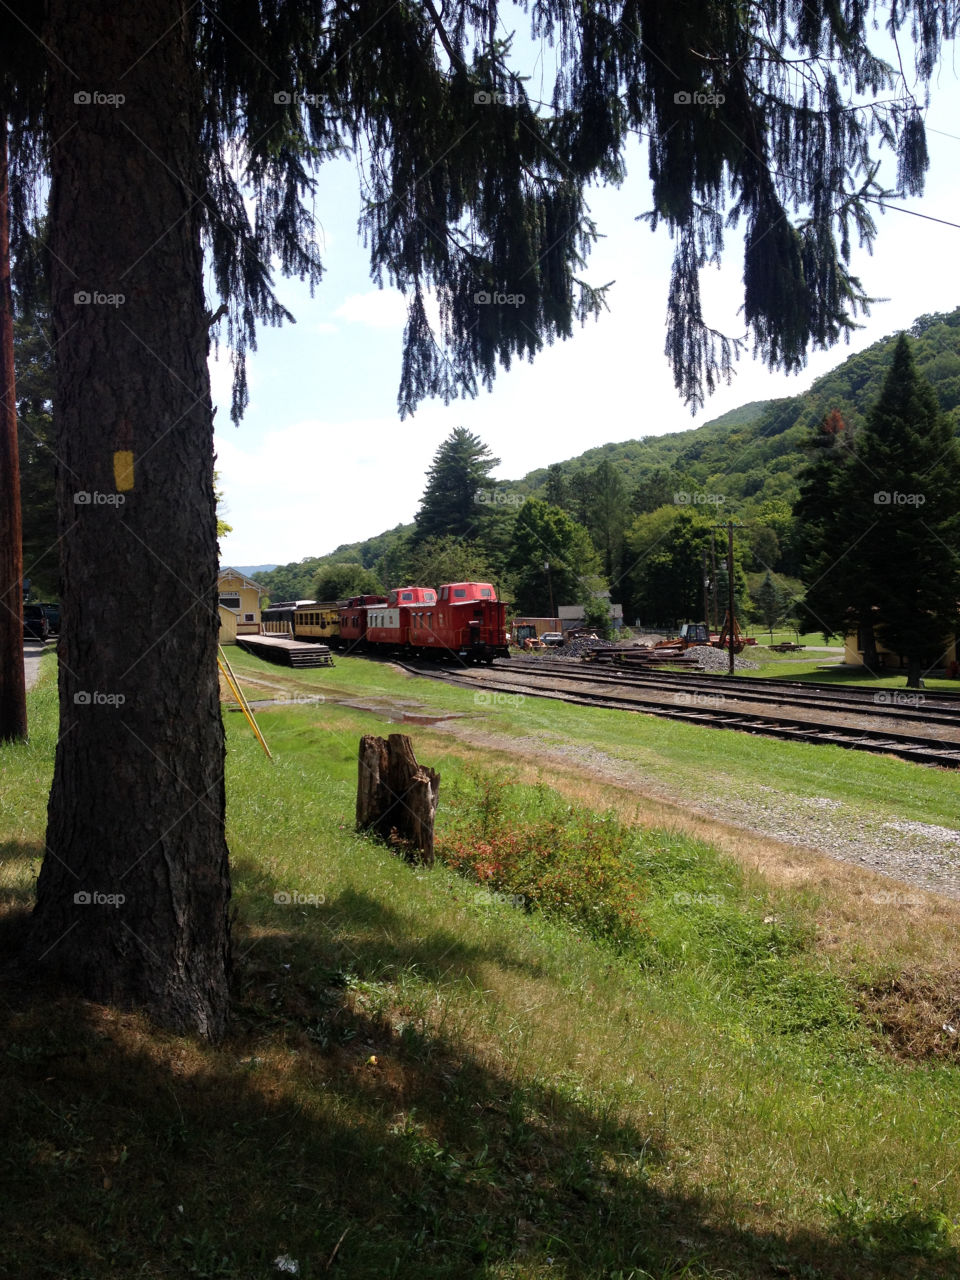 Train in West Virginia 